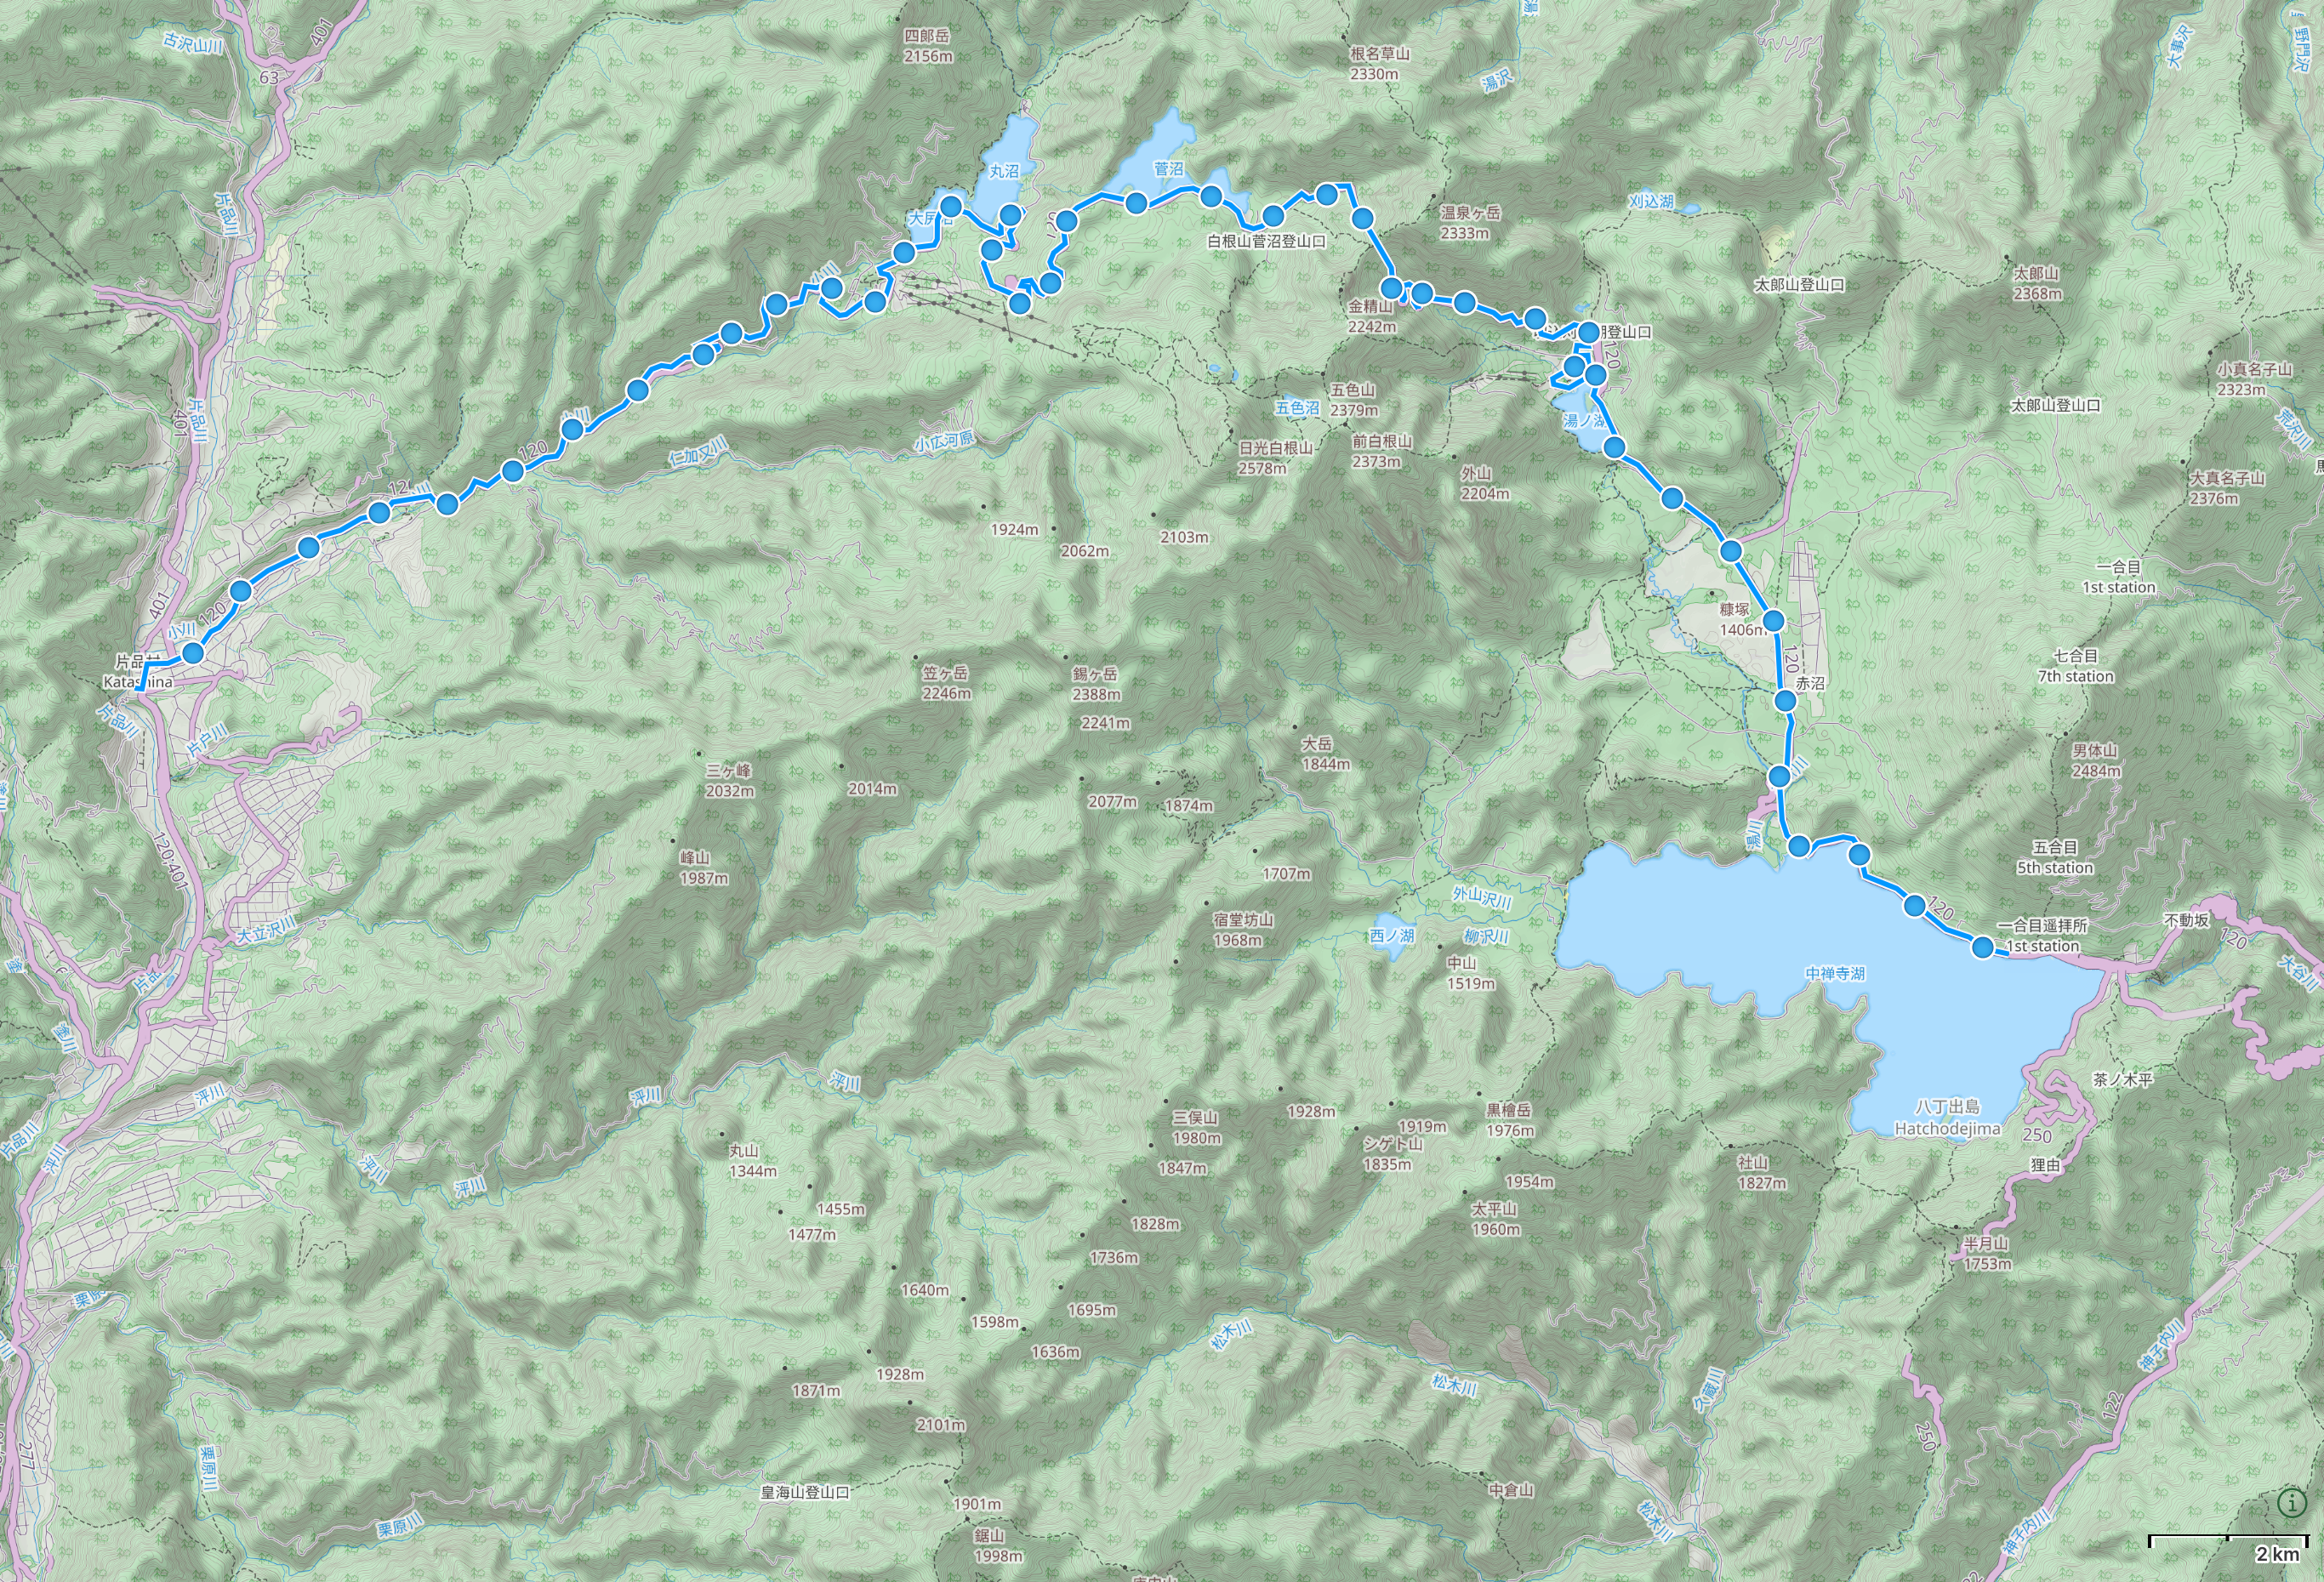 Map of Central Honshu with author’s route from Katashina, Gunma to Lake Chūzenji, Tochigi highlighted.